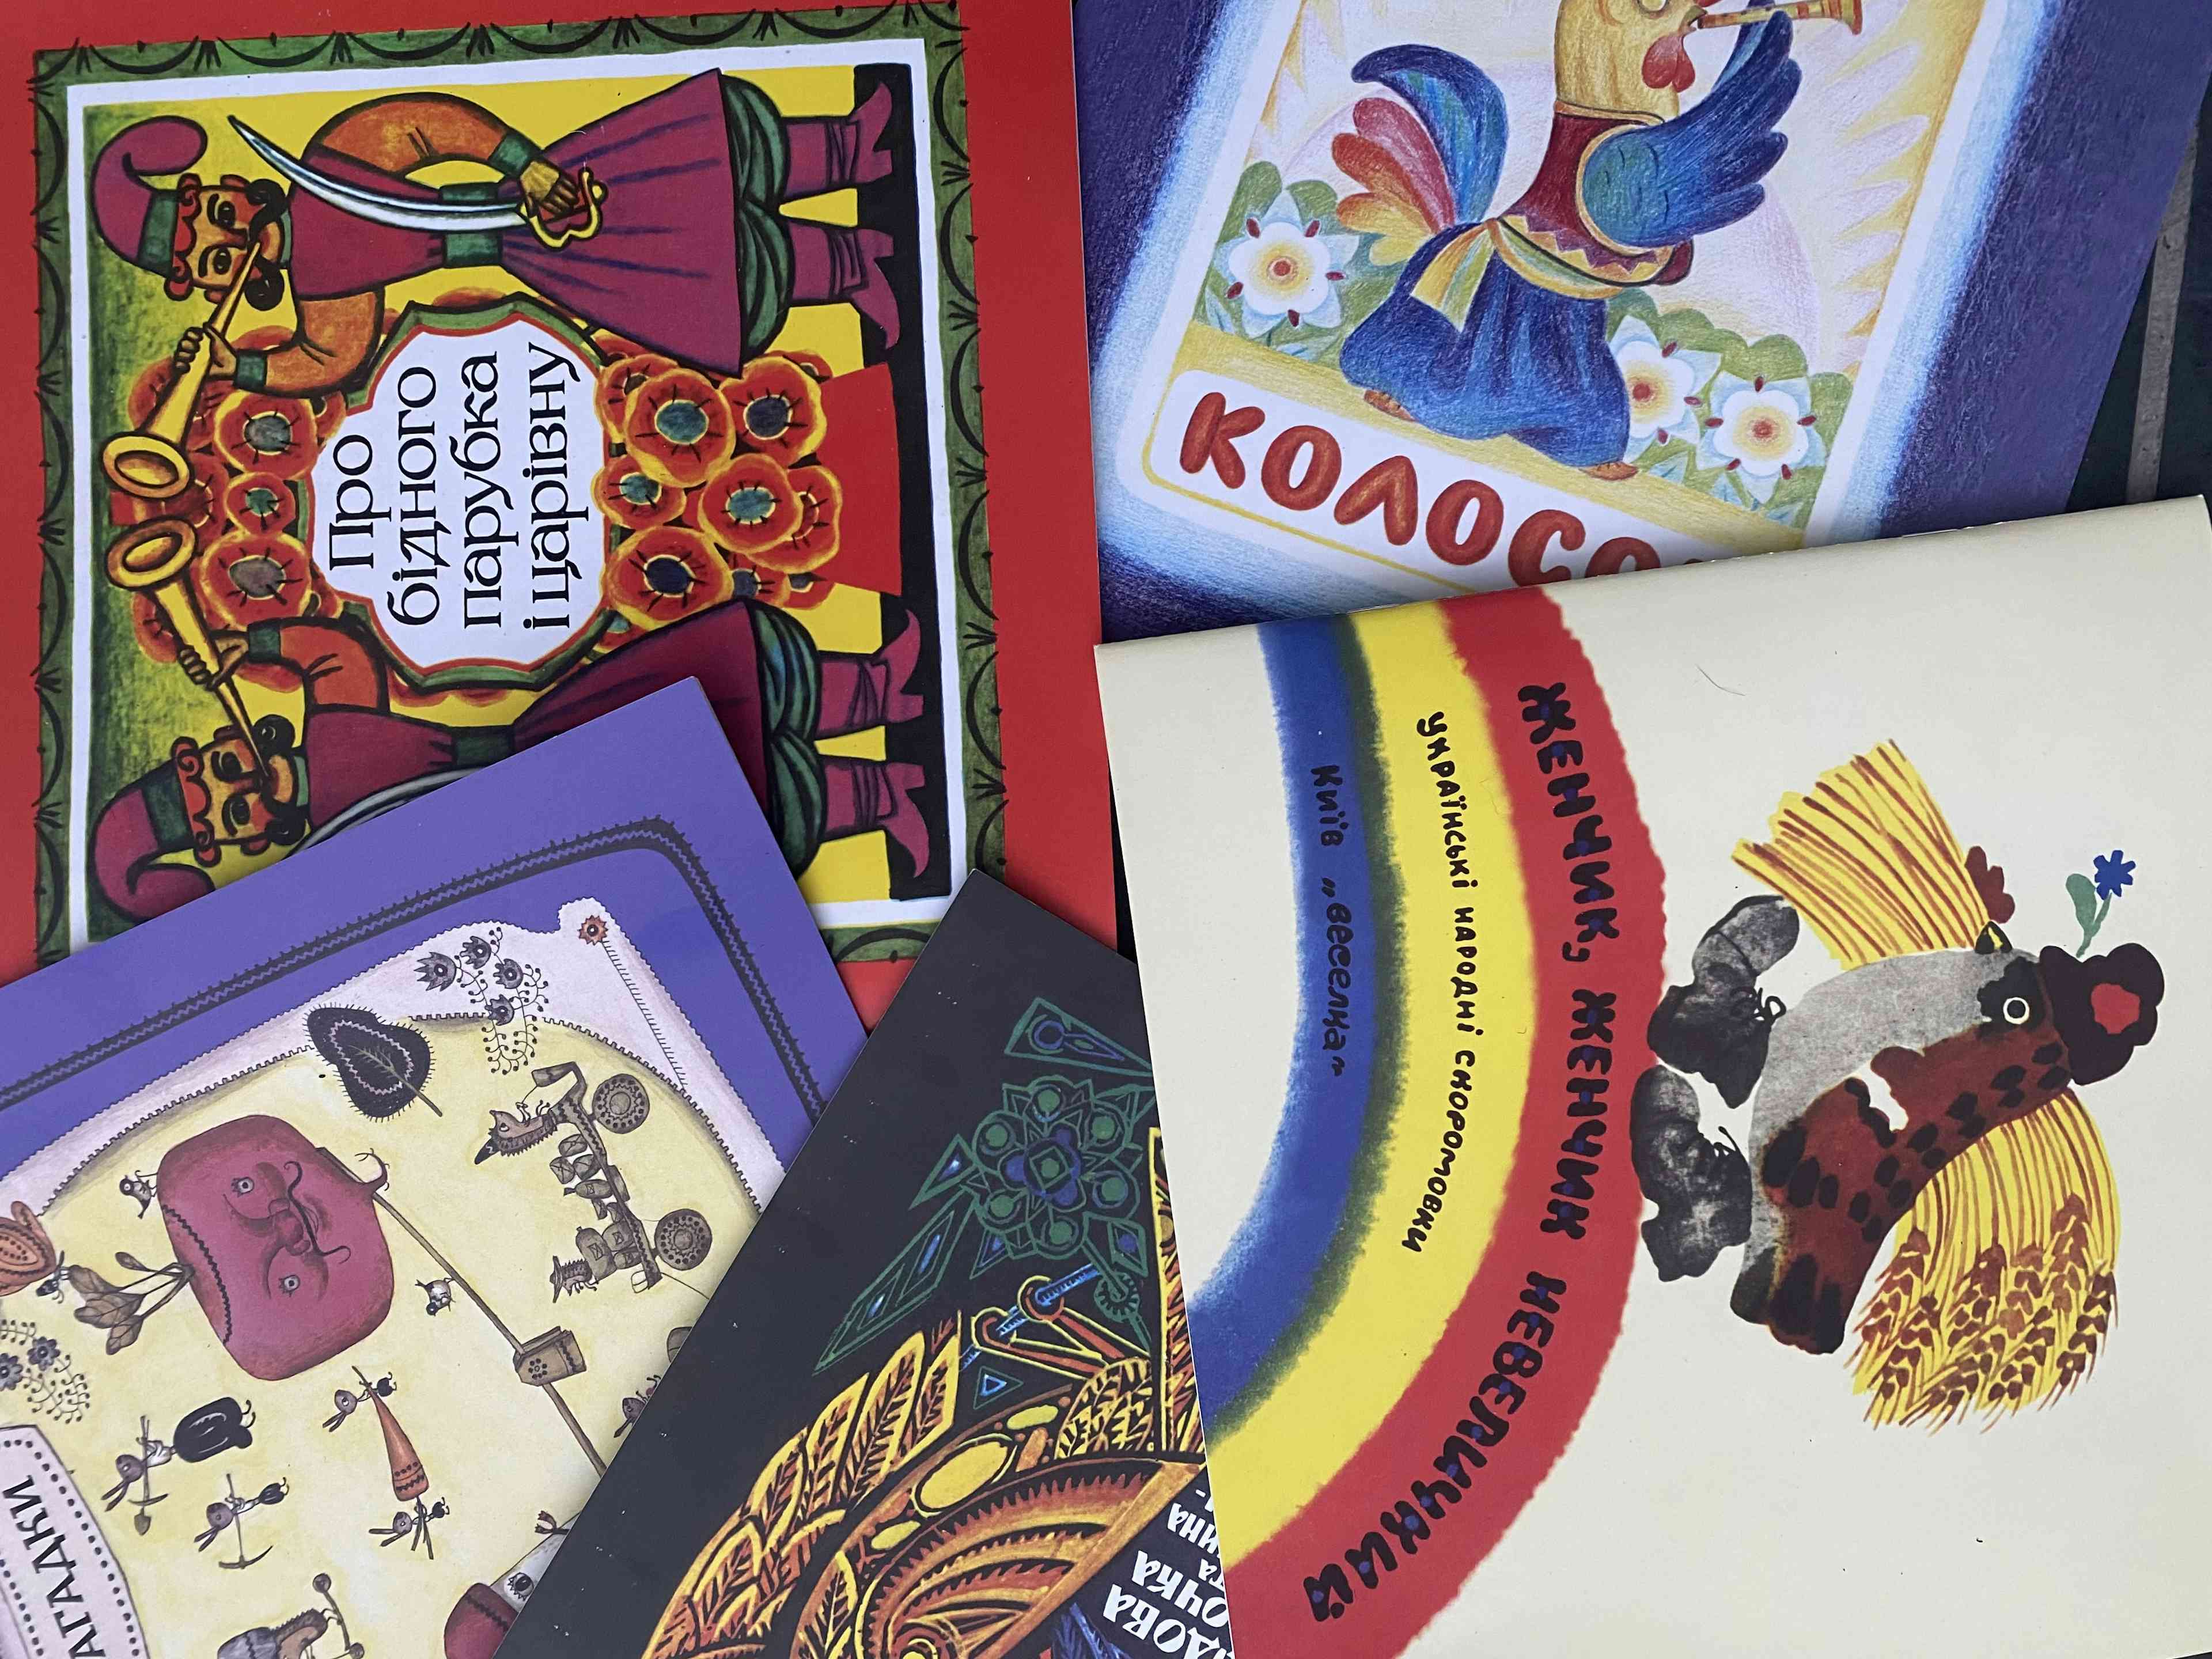 The first 5 Ukrainian children's books